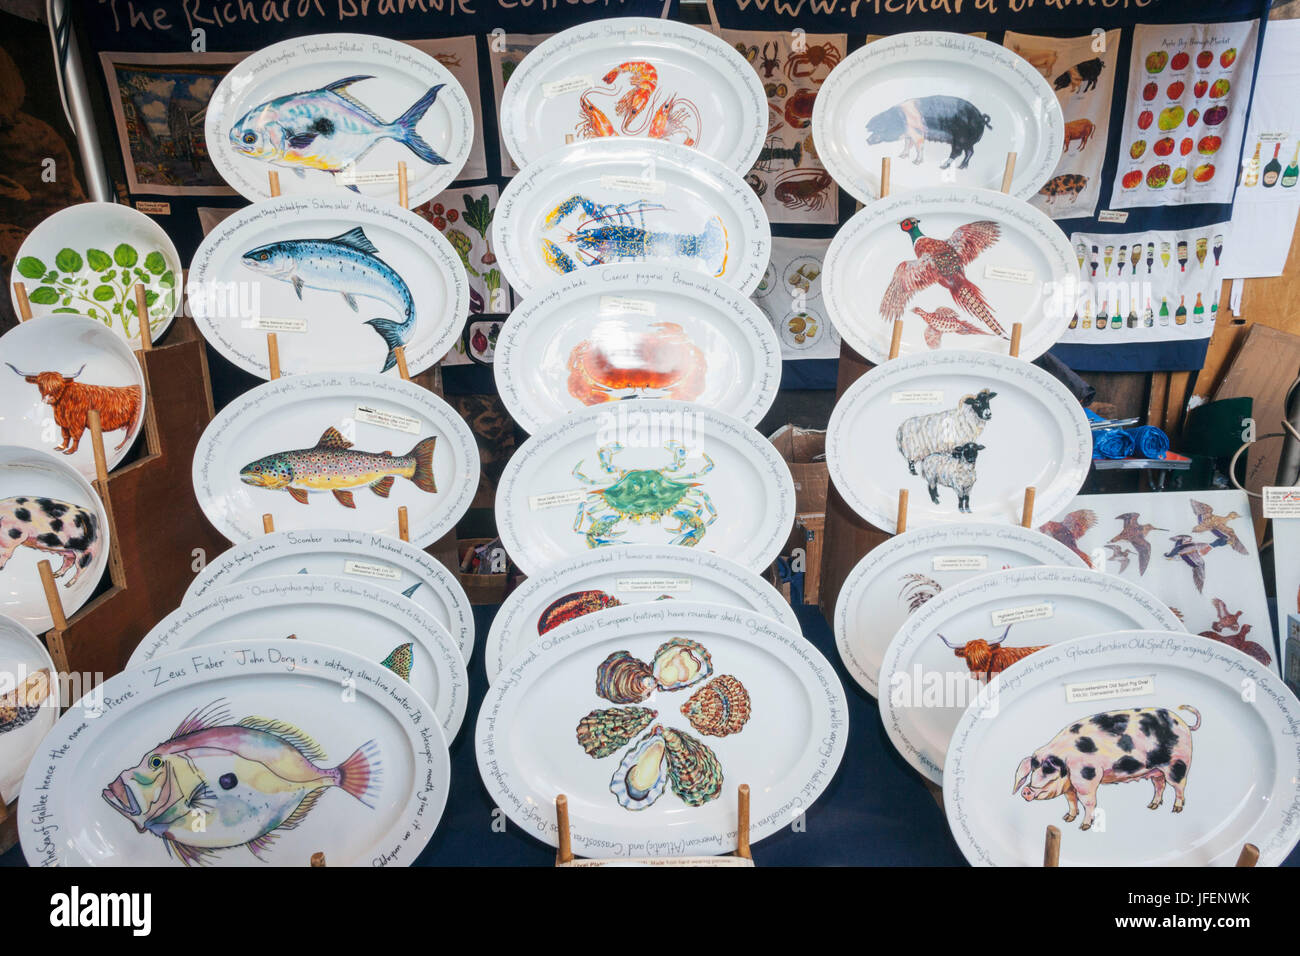 England, London, Southwark, Borough Market, Kitchenware Stall Display of Plates Stock Photo